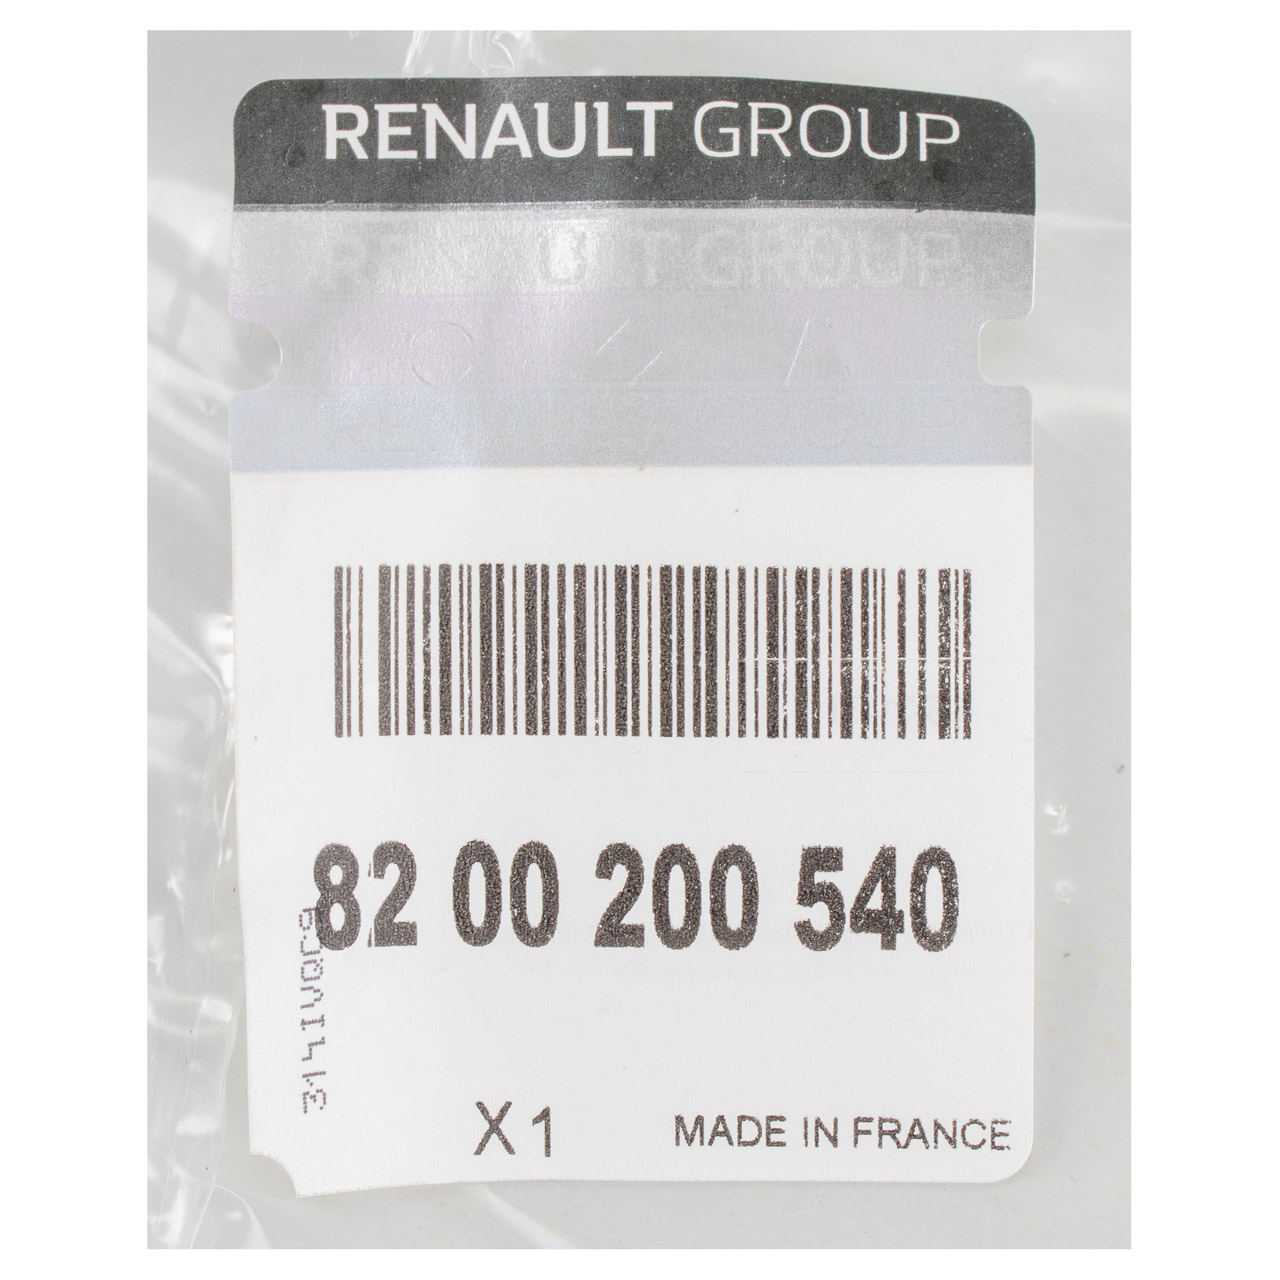 1x ORIGINAL Renault Radkappe Radblende 14 Zoll Silber Kangoo Twingo 8200200540